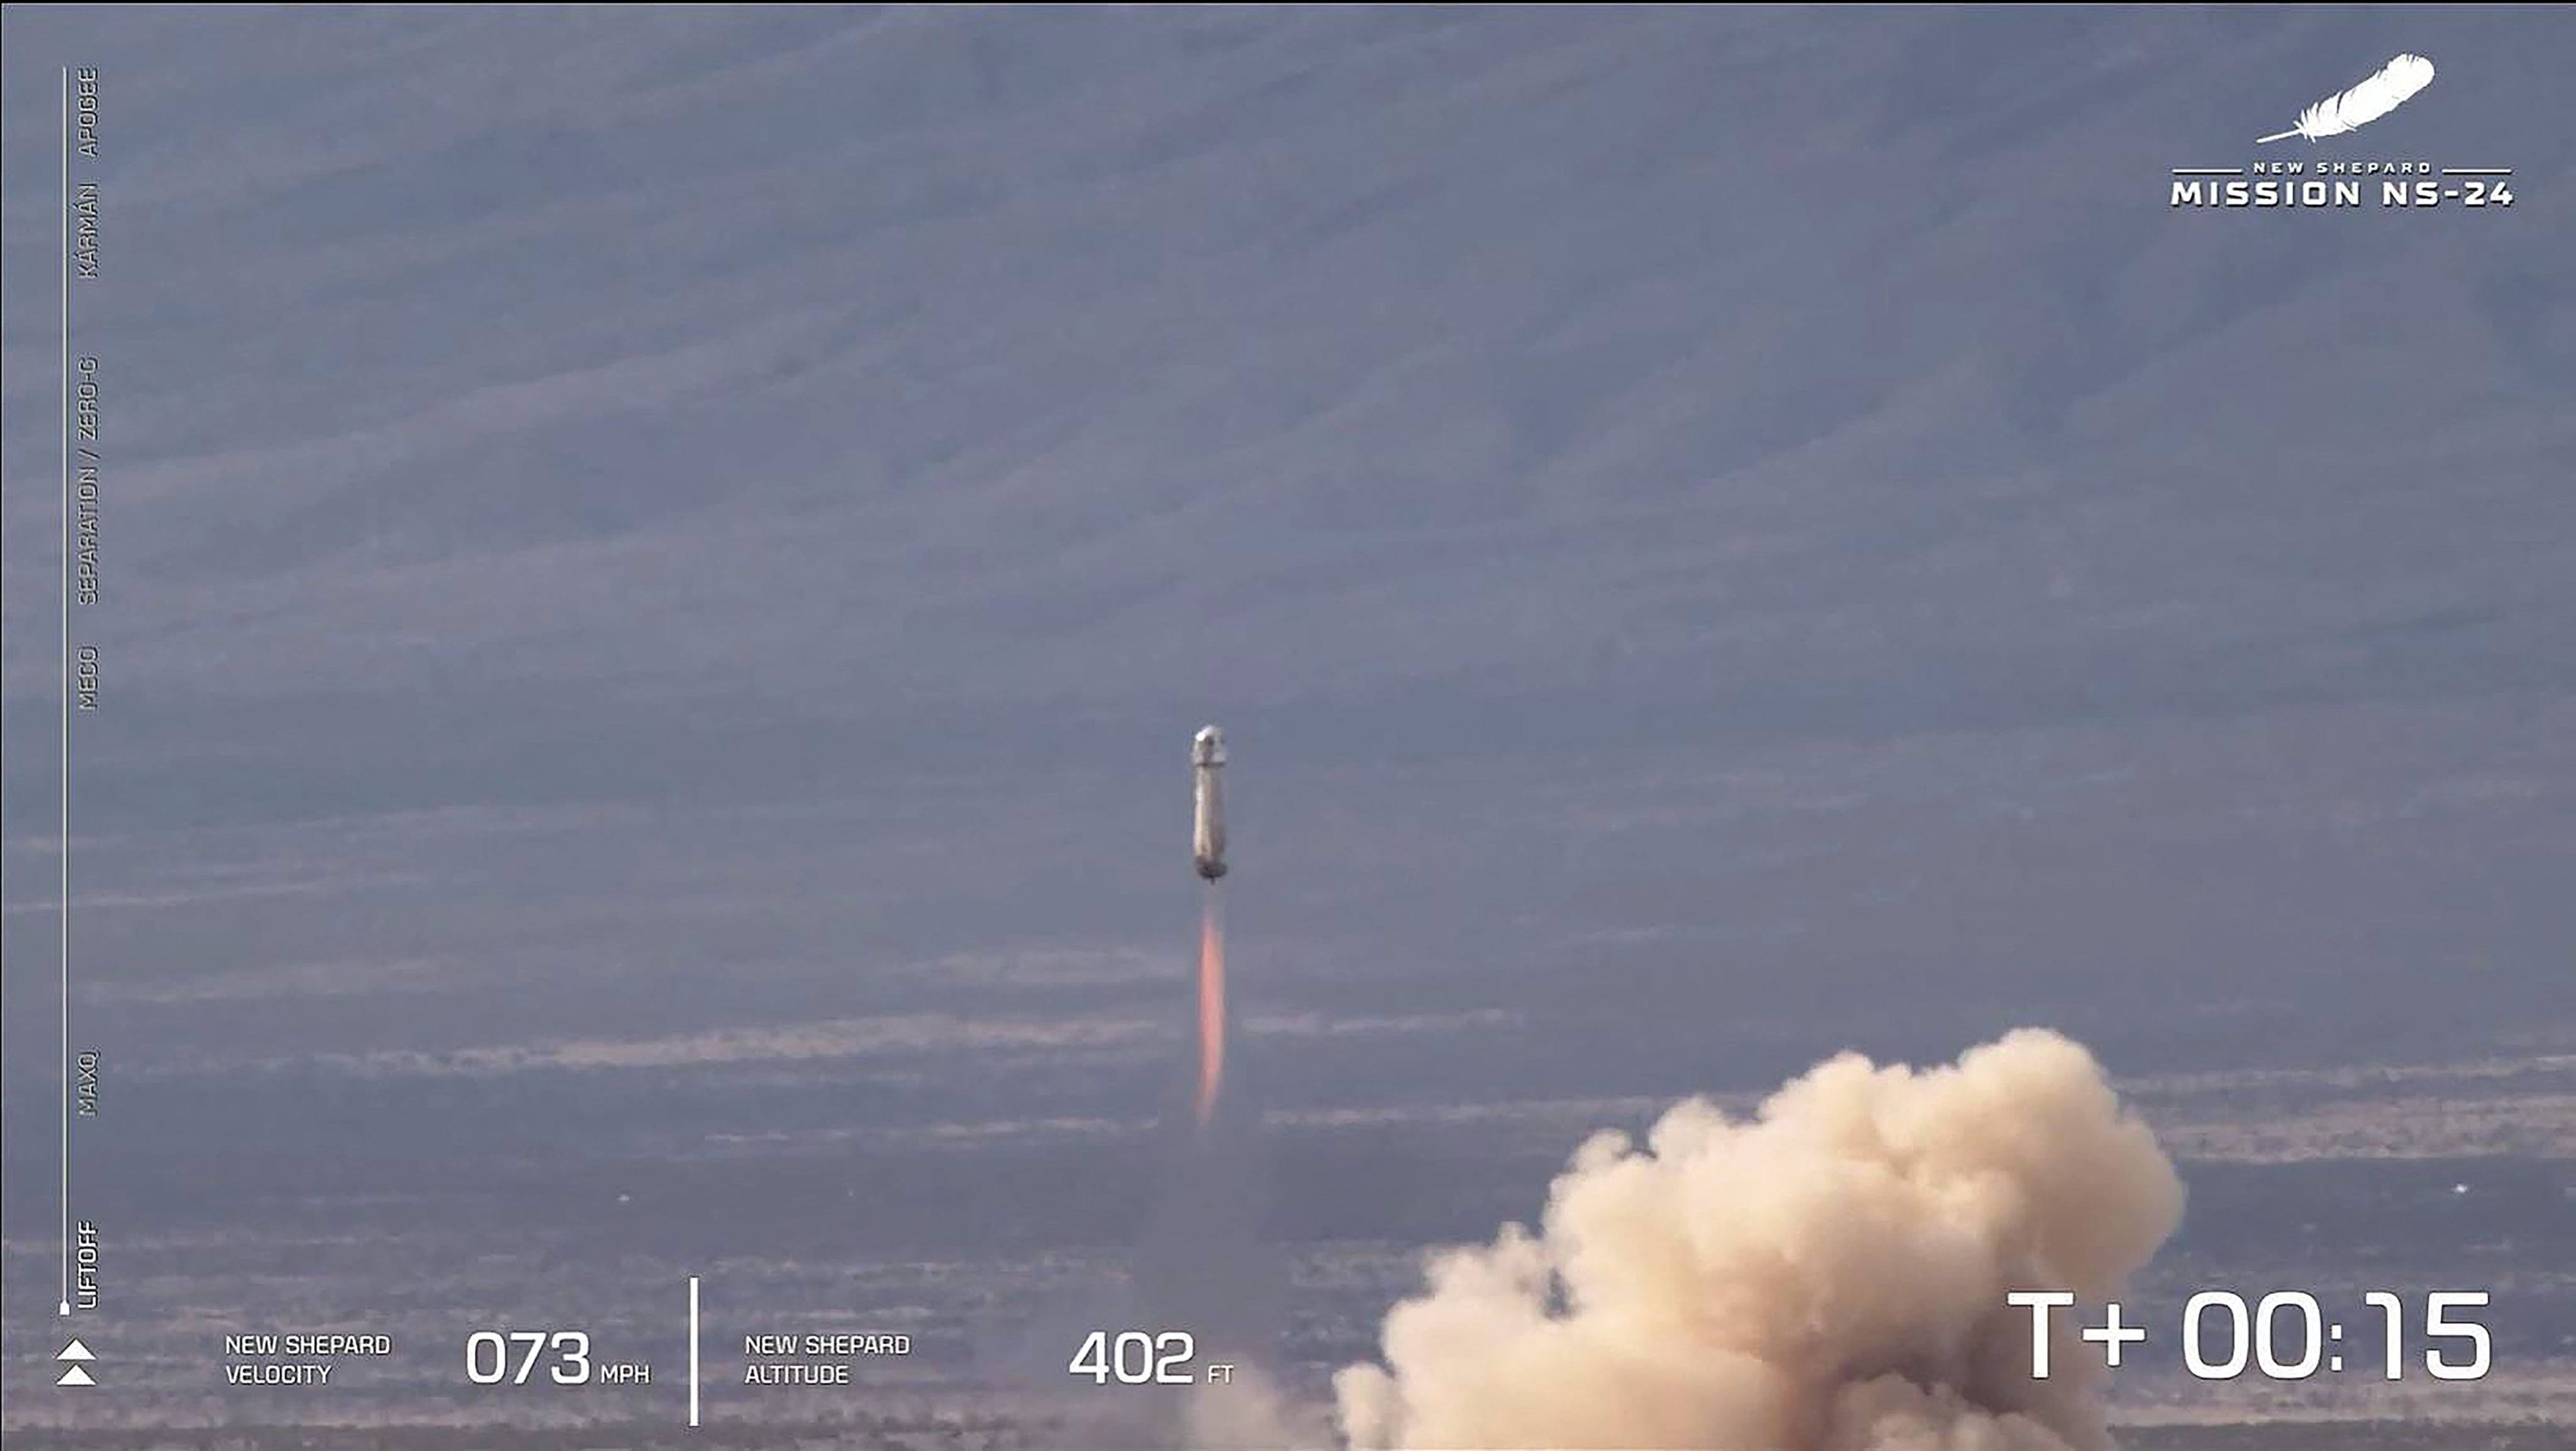 The New Shepherd rocket blasts off from the Blue Origin base near Van Horn, Texas, on Tuesday. Photo: Blue Origin via AFP